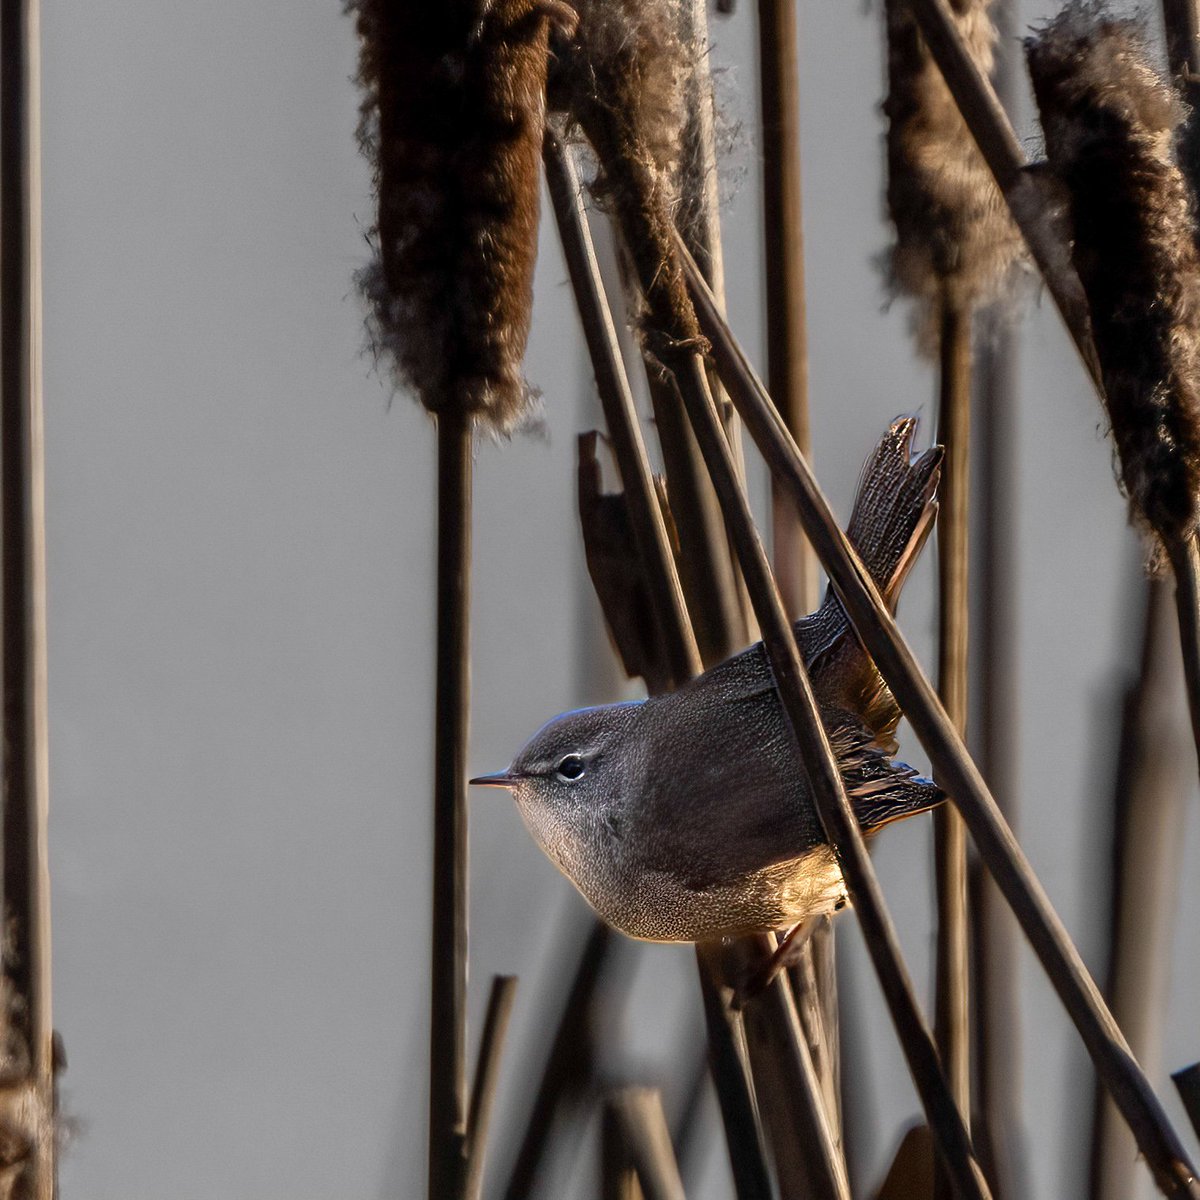 Cetti's Warbler 

#TwitterNatureCommunity
#birdtonic
#nature
#bbcwildlifepotd
#birds
#naturelovers
#naturephotography 
#cettiswarbler